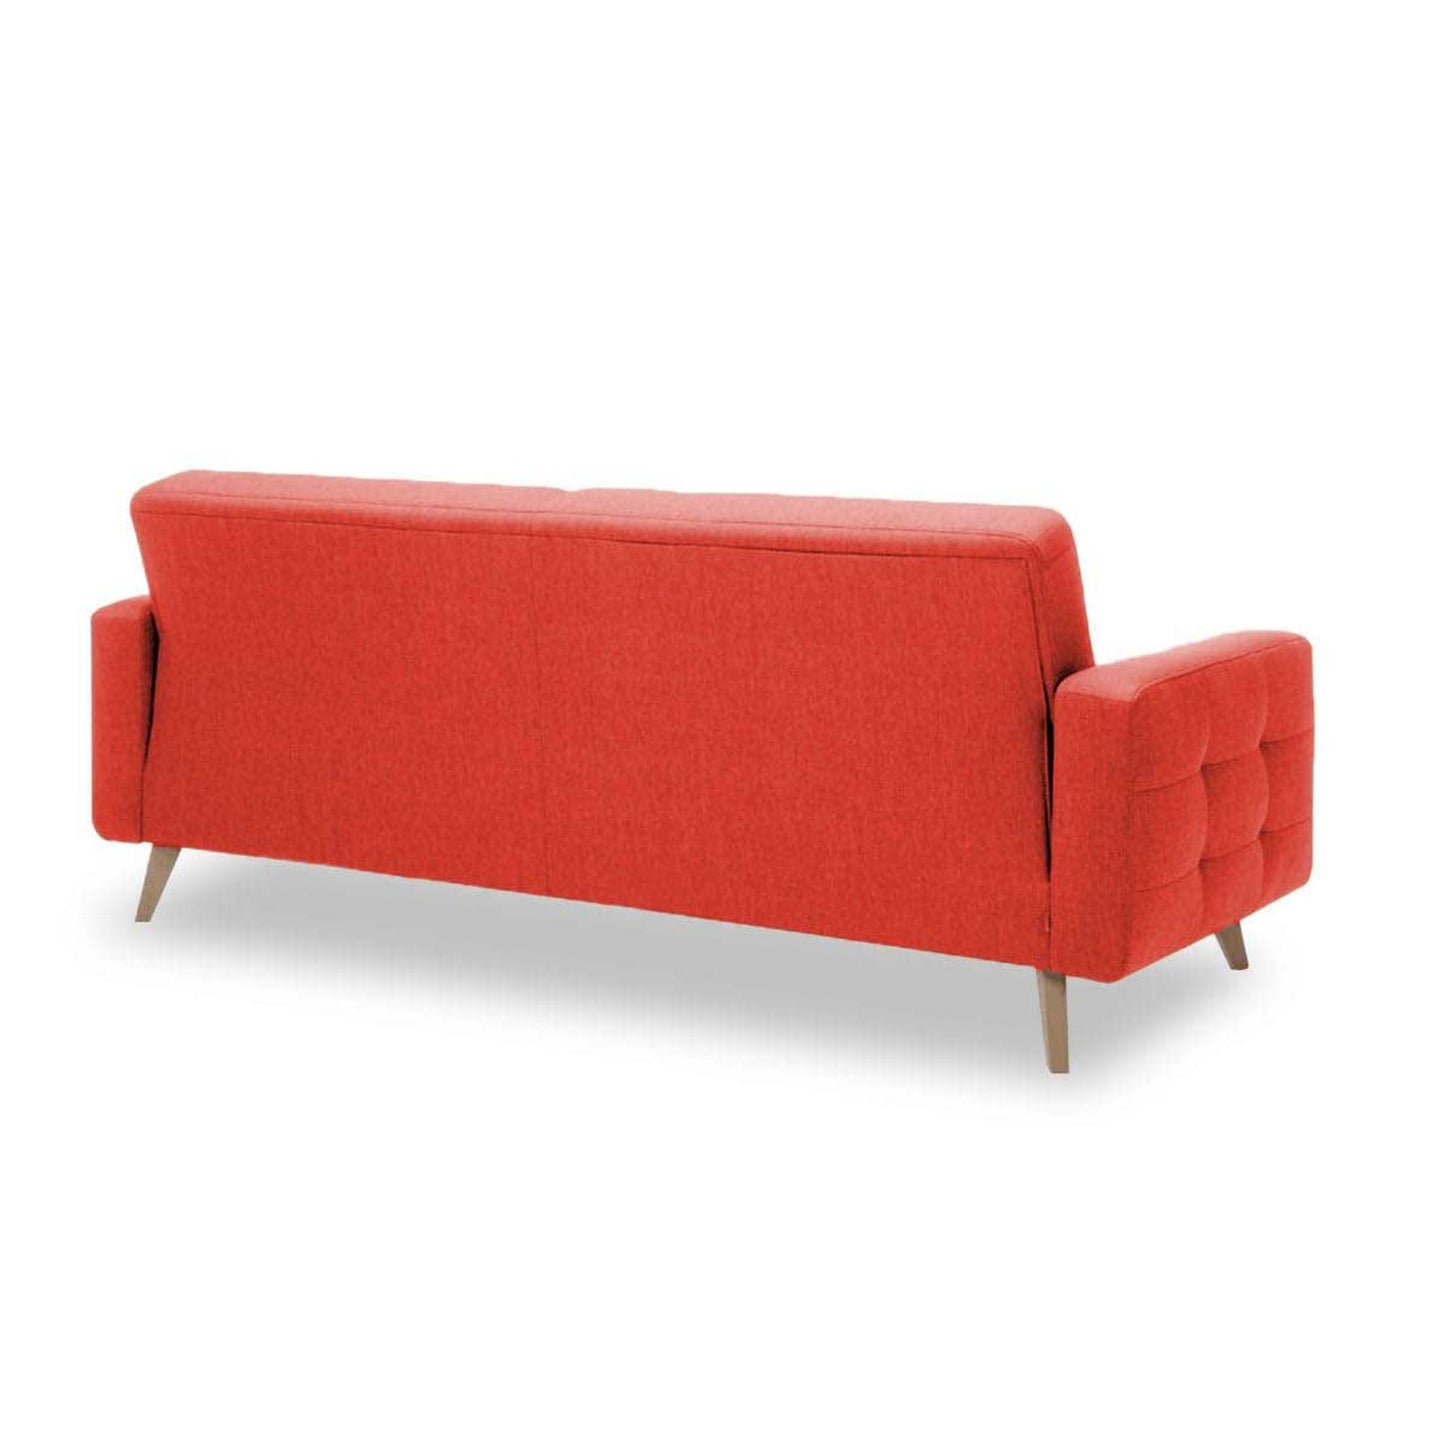 Nappa Sofa Bed Sleeper in Terracotta